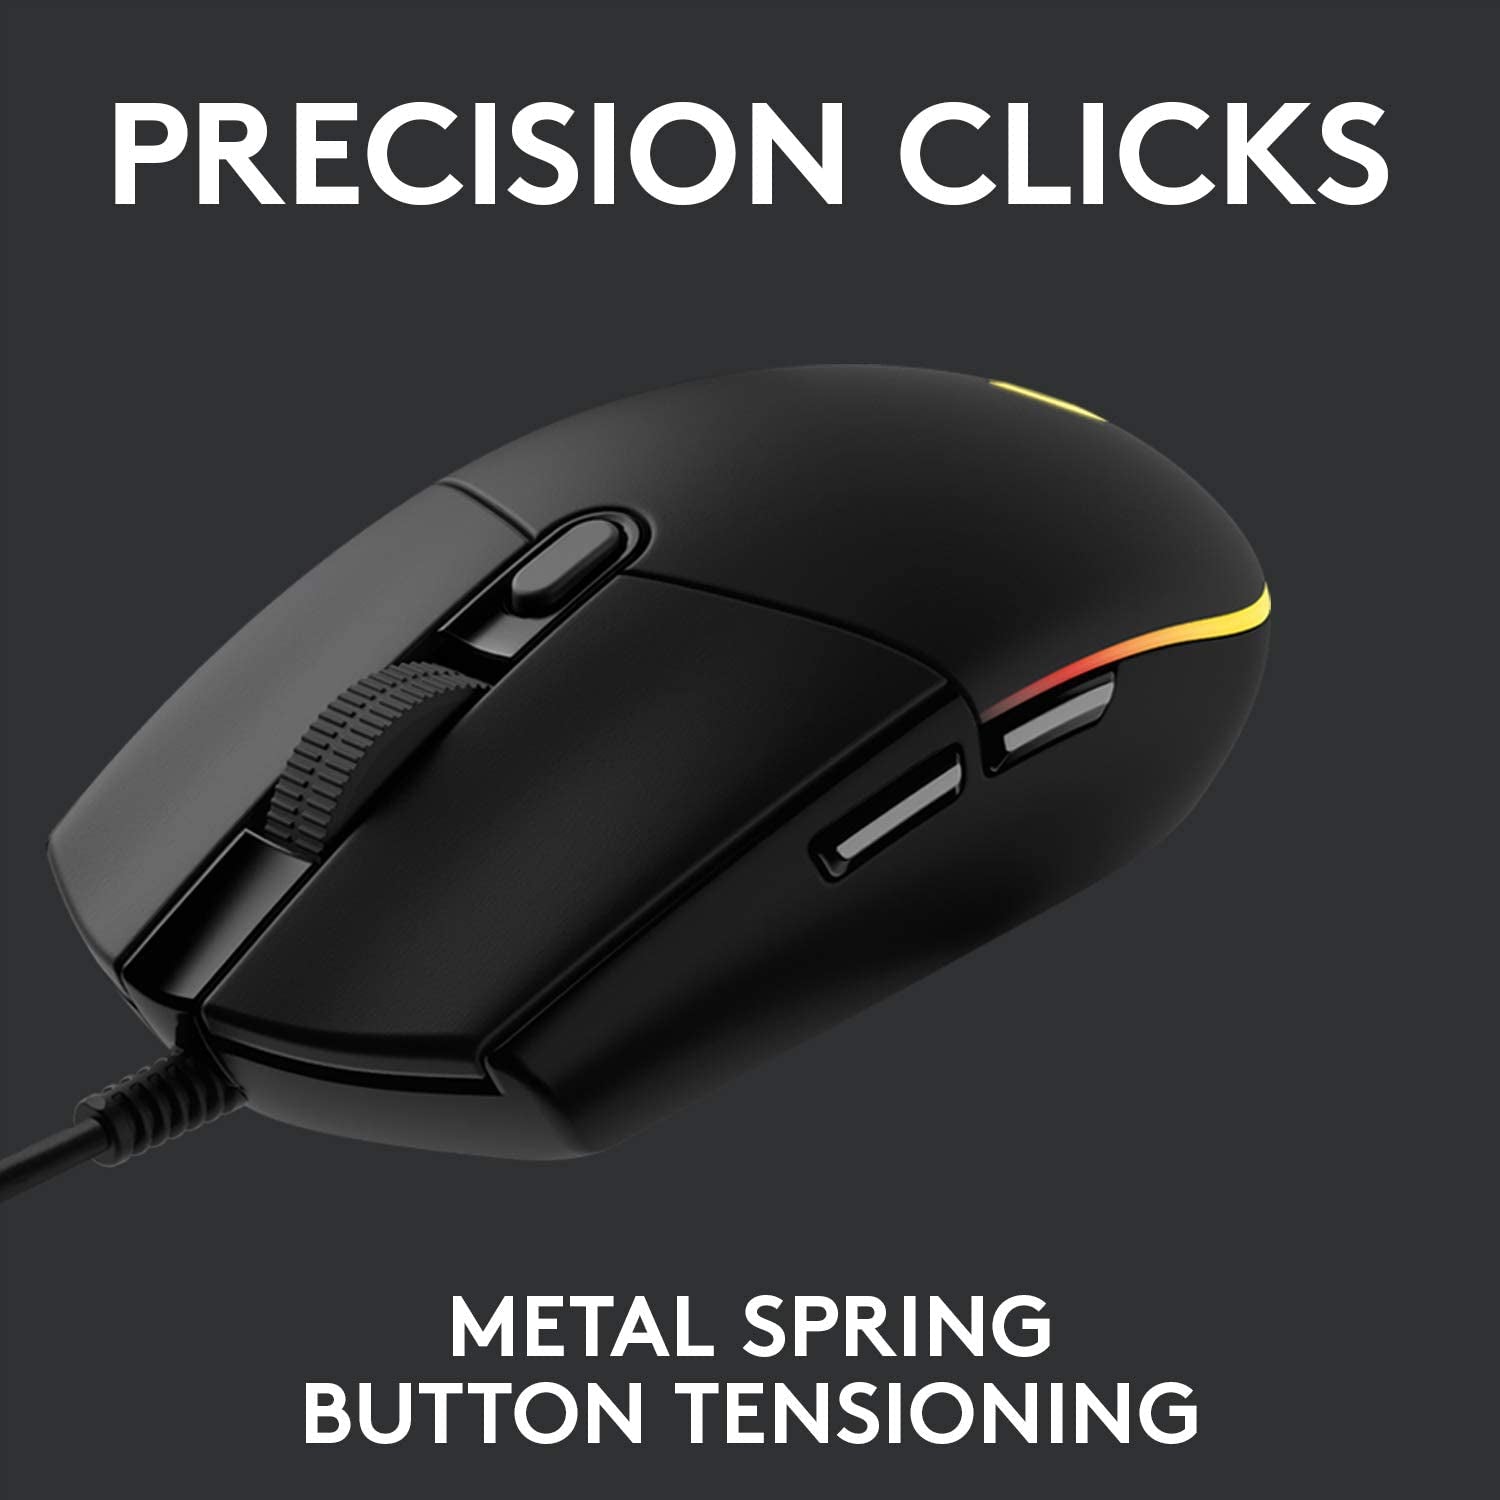 G203 LIGHTSYNC Gaming Mouse with Customizable RGB Lighting, 6 Programmable Buttons, Gaming Grade Sensor, 8K DPI Tracking, Lightweight - Black - FoxMart™️ - FoxMart™️